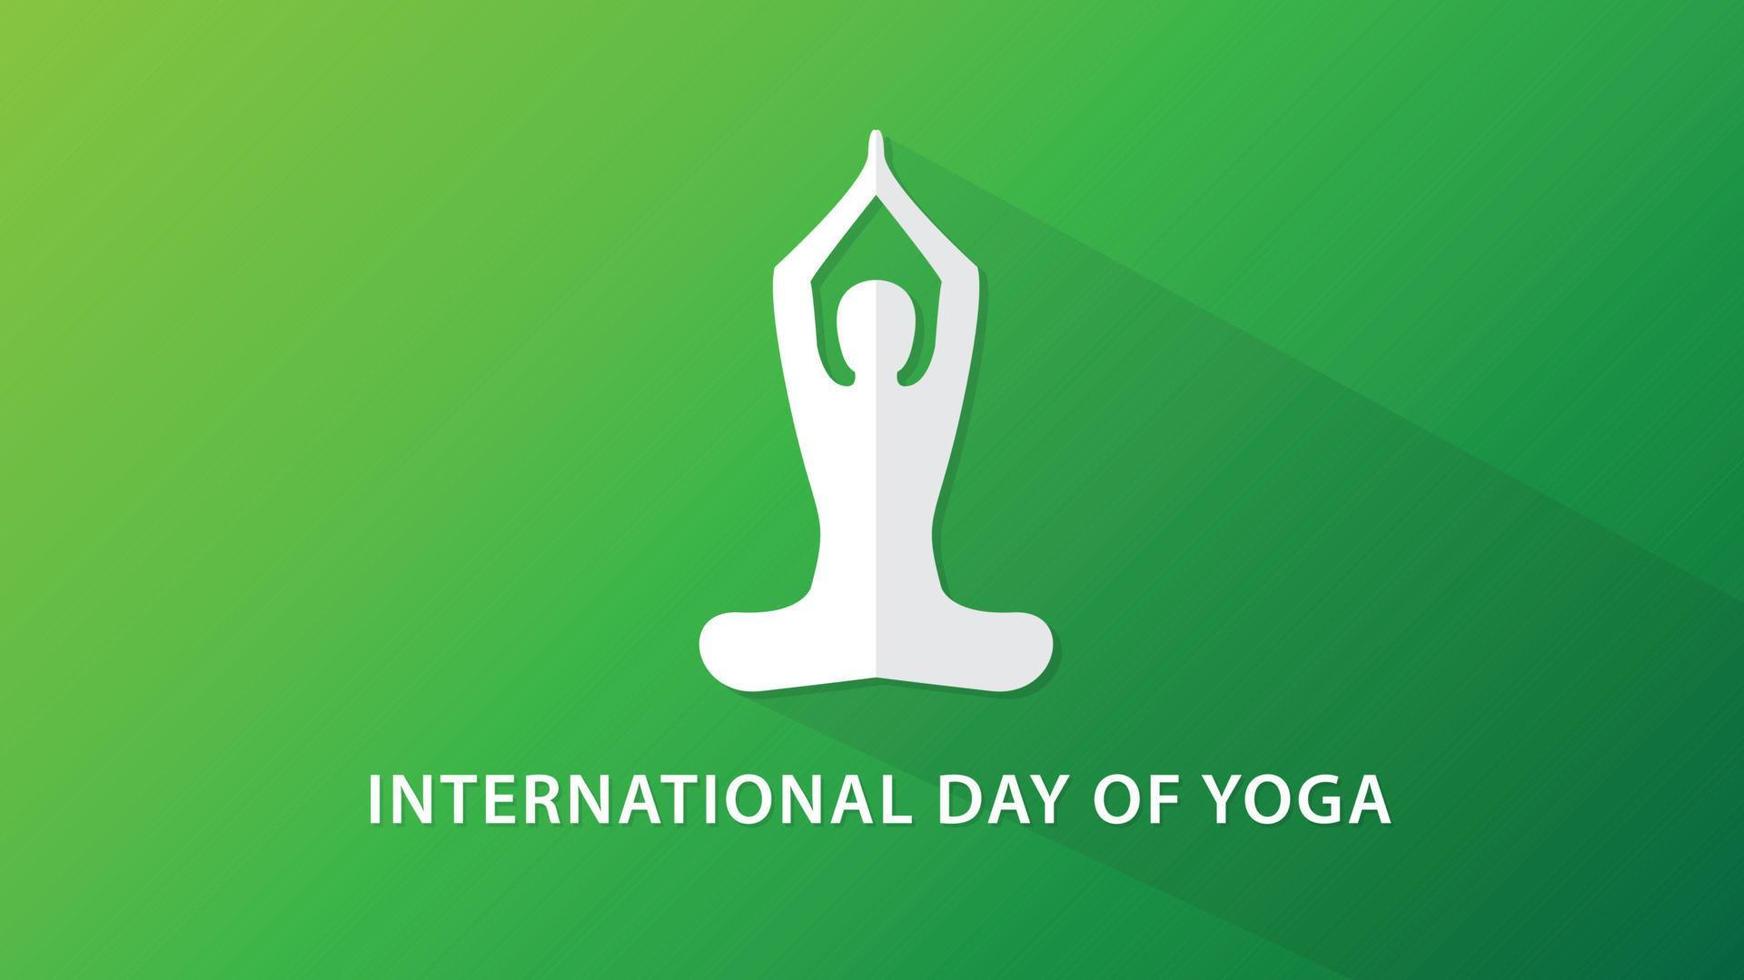 International Day of Yoga. Vector illustration